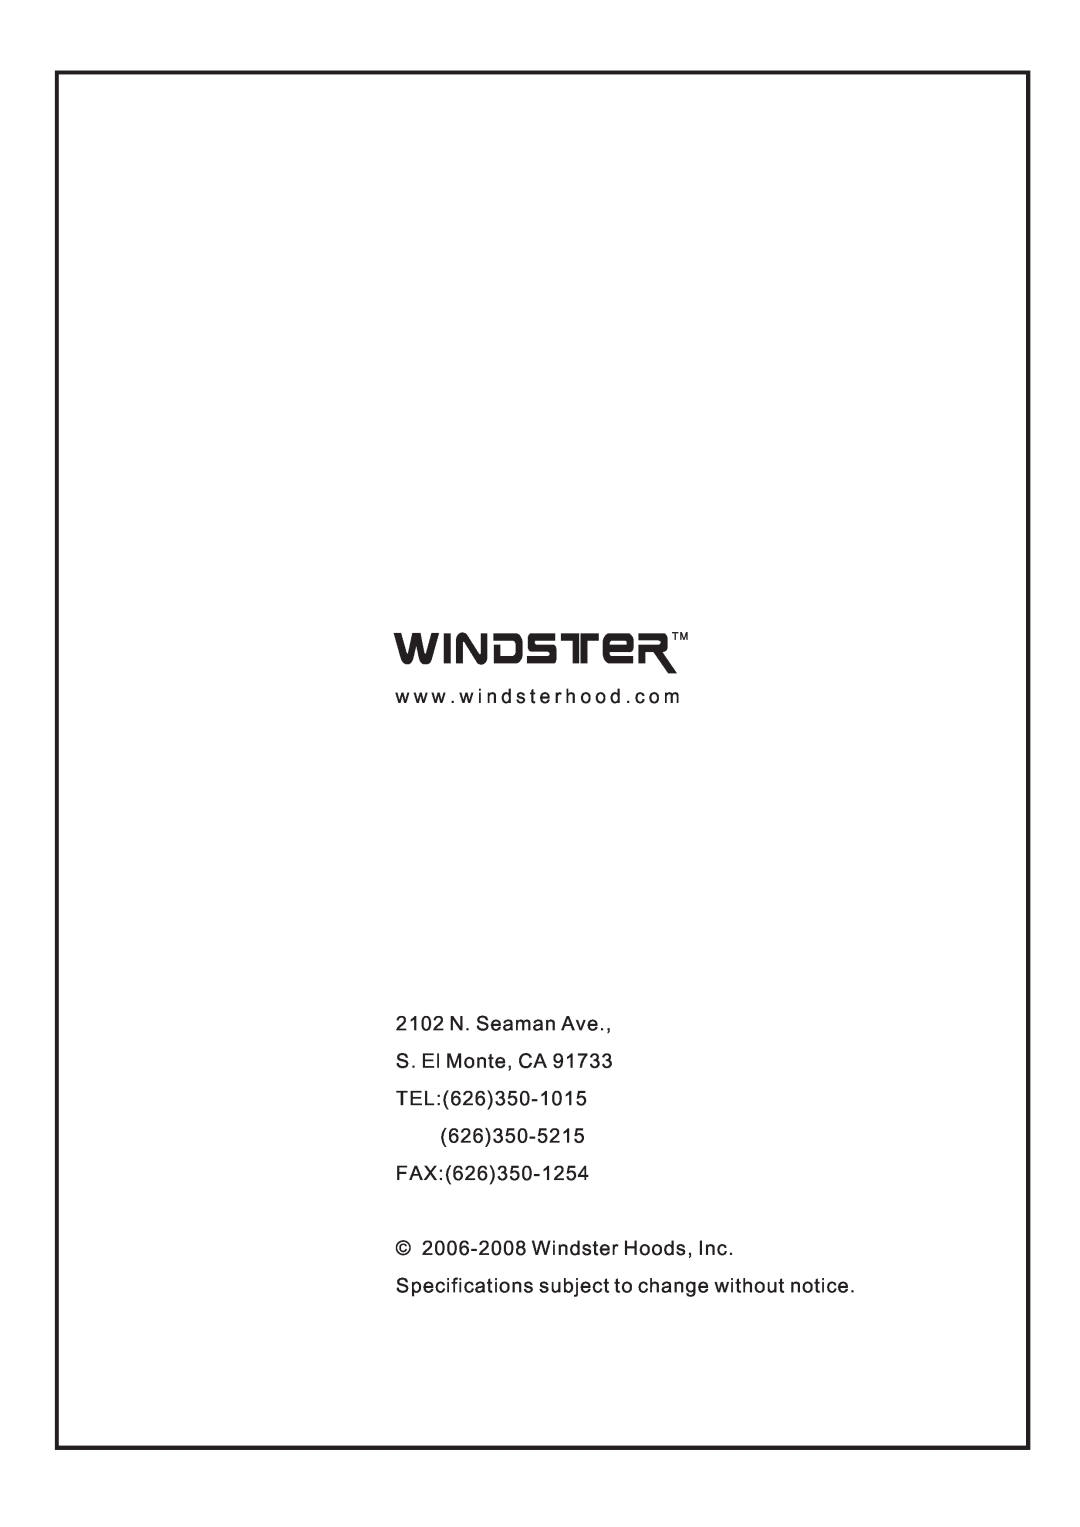 Windster WS-38 manual Windstertm, w w w . w i n d s t e r h o o d . c o m 2102 N. Seaman Ave 